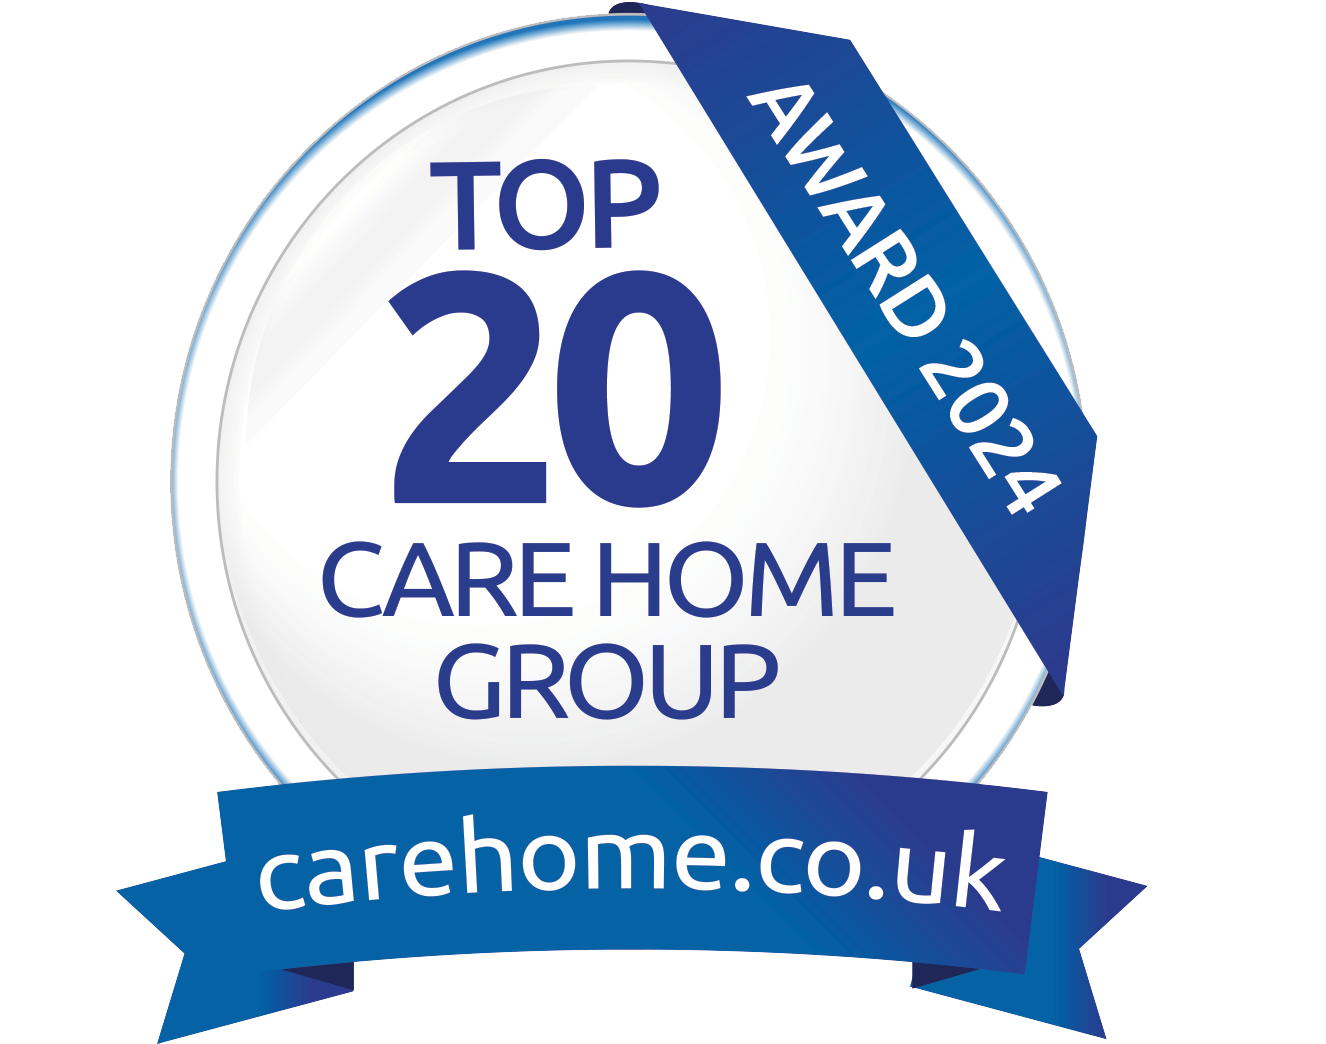 Top 20 Care Home Group award.